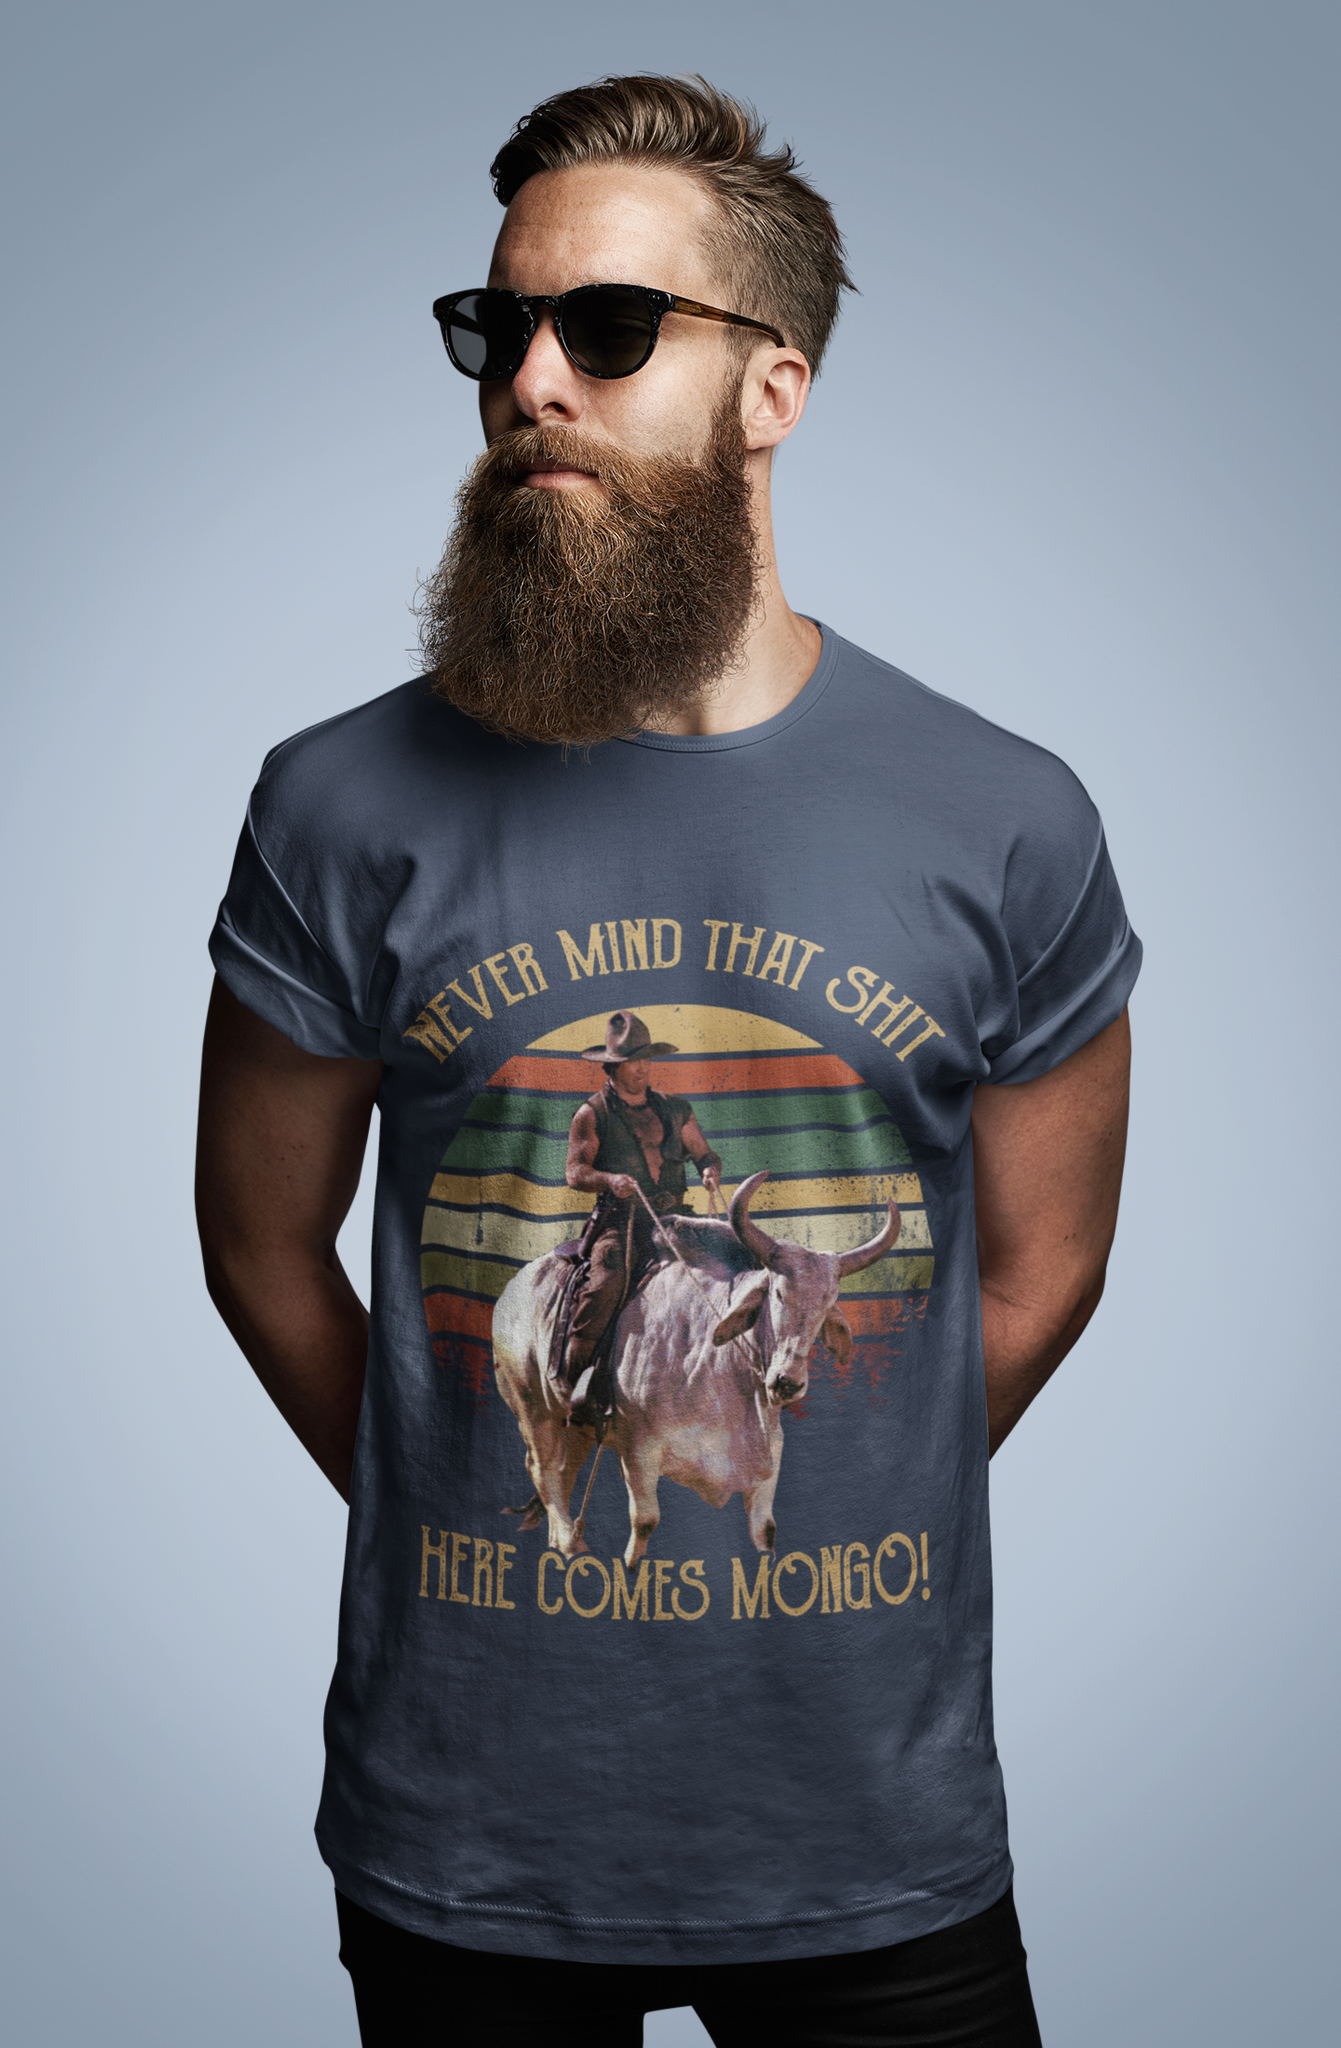 Blazing Saddles Vintage T Shirt, Never Mind That Shit Here Comes Mongo Tshirt, Mongo T Shirt